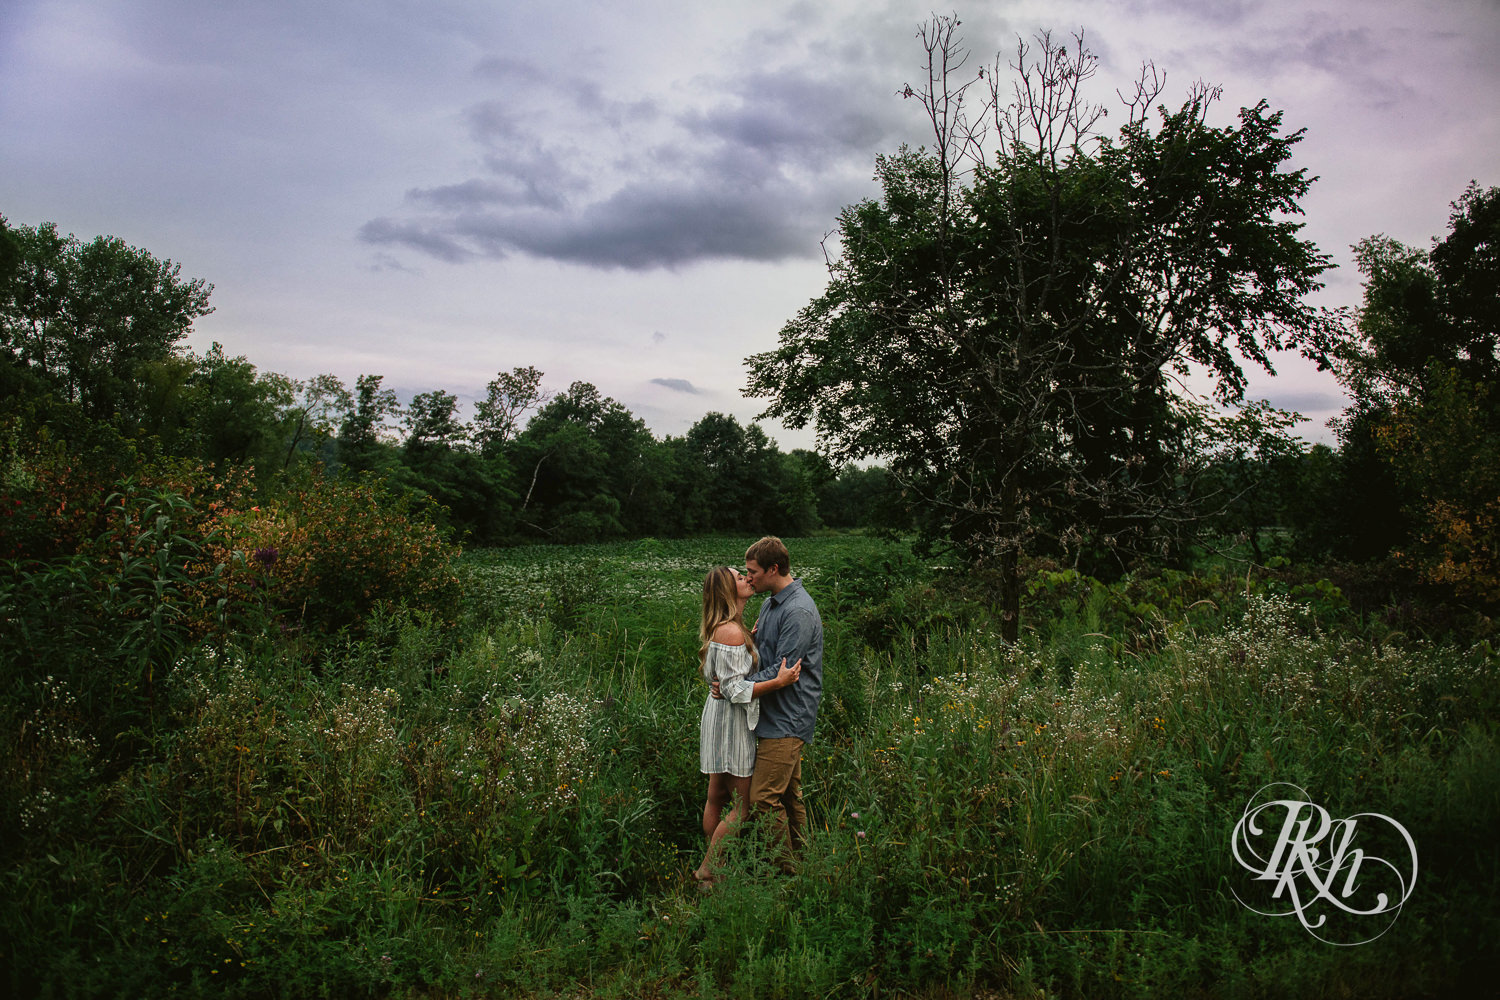 Man and woman kiss in field at sunrise in Lebanon Hills Regional Park in Eagan, Minnesota.